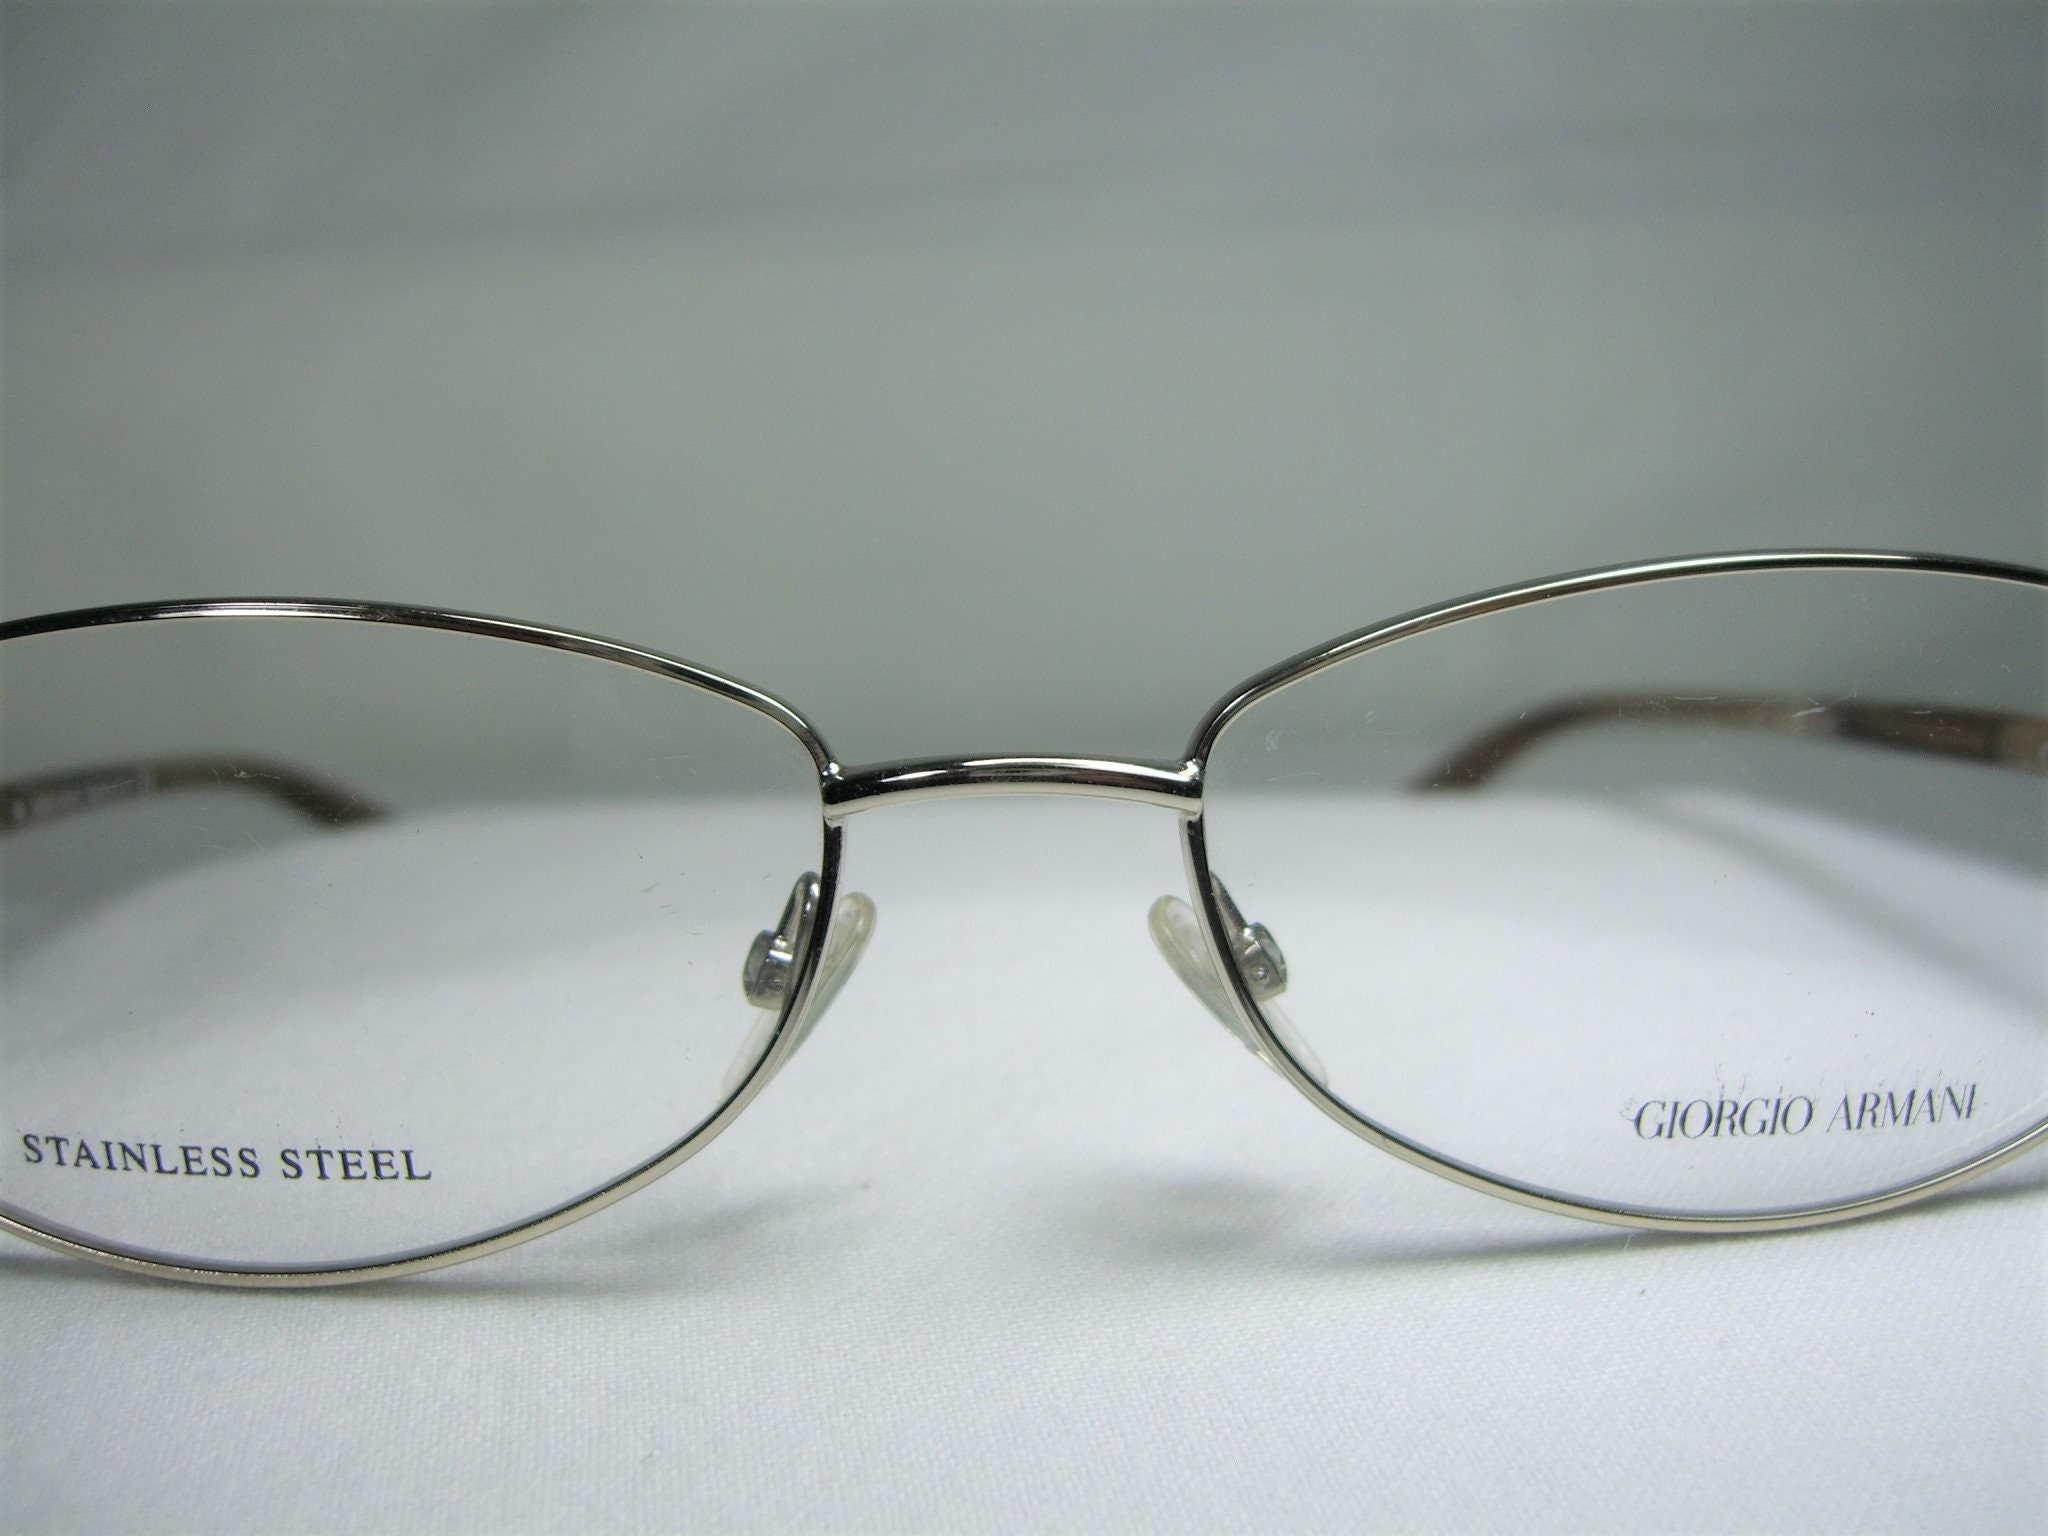 Giorgio Armani Eyeglasses Square Oval Frames Stainless - Etsy UK